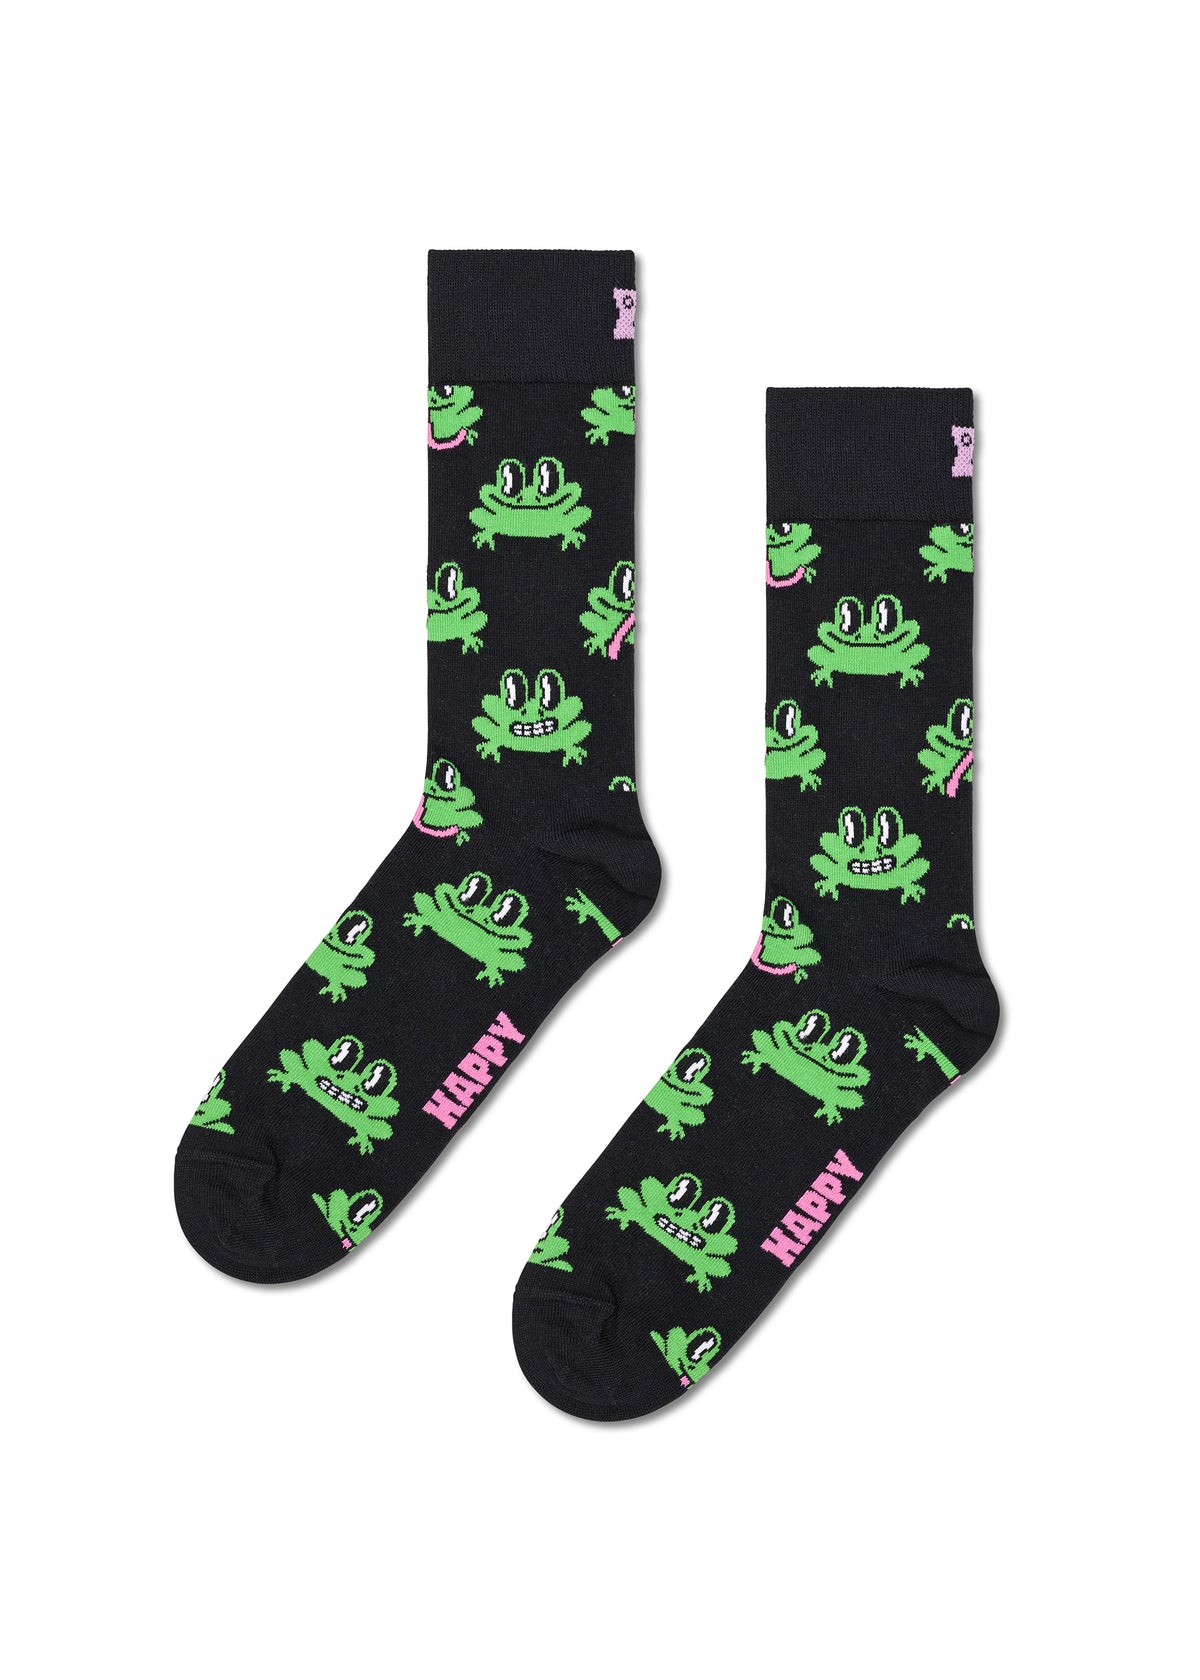 Adult socks - Frog